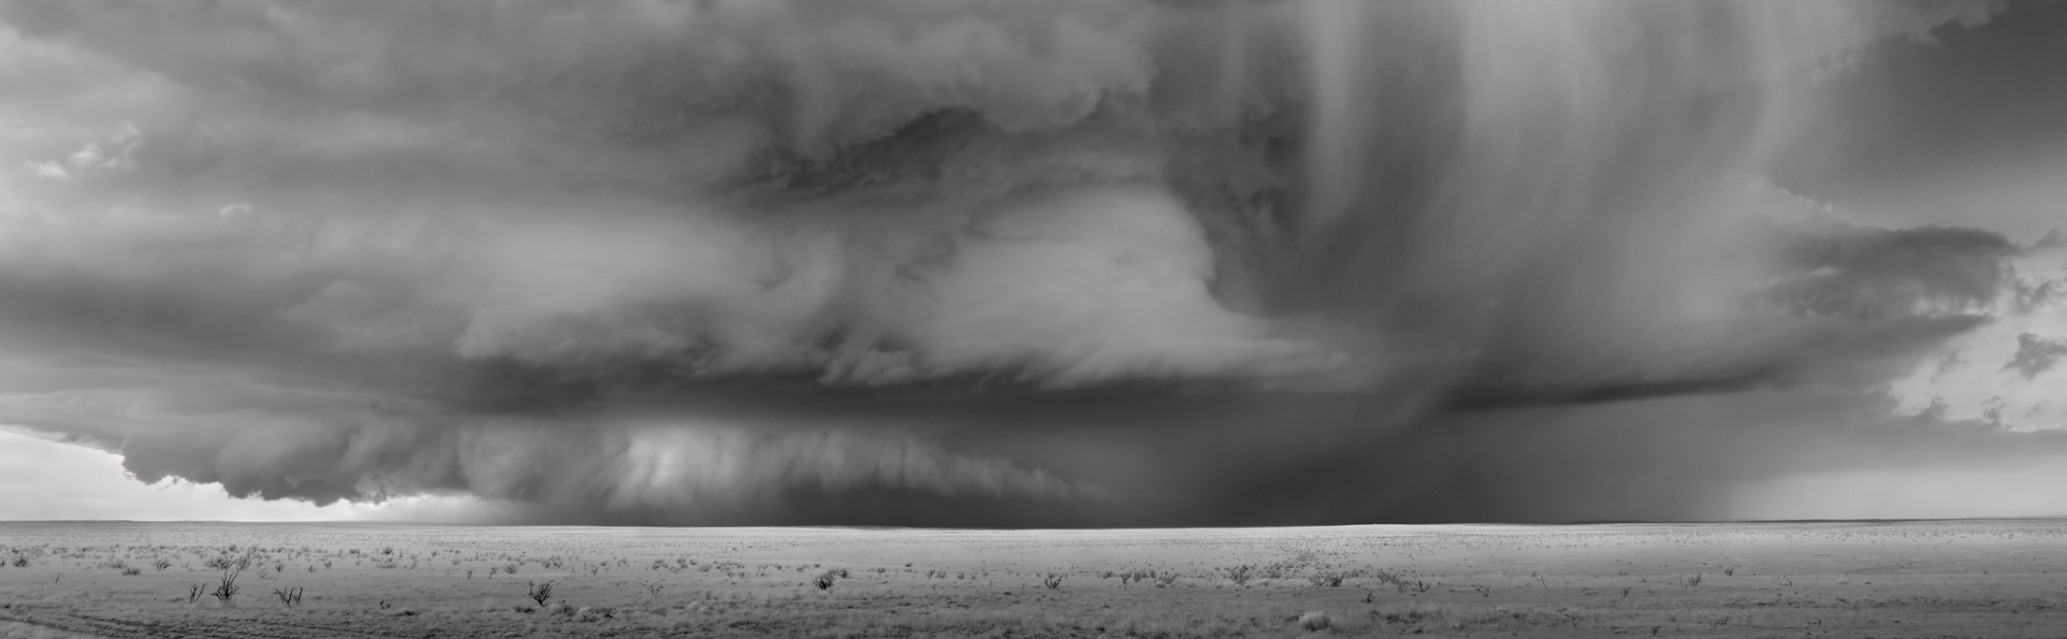 Hailstorm Approach - Mitch DOBROWNER